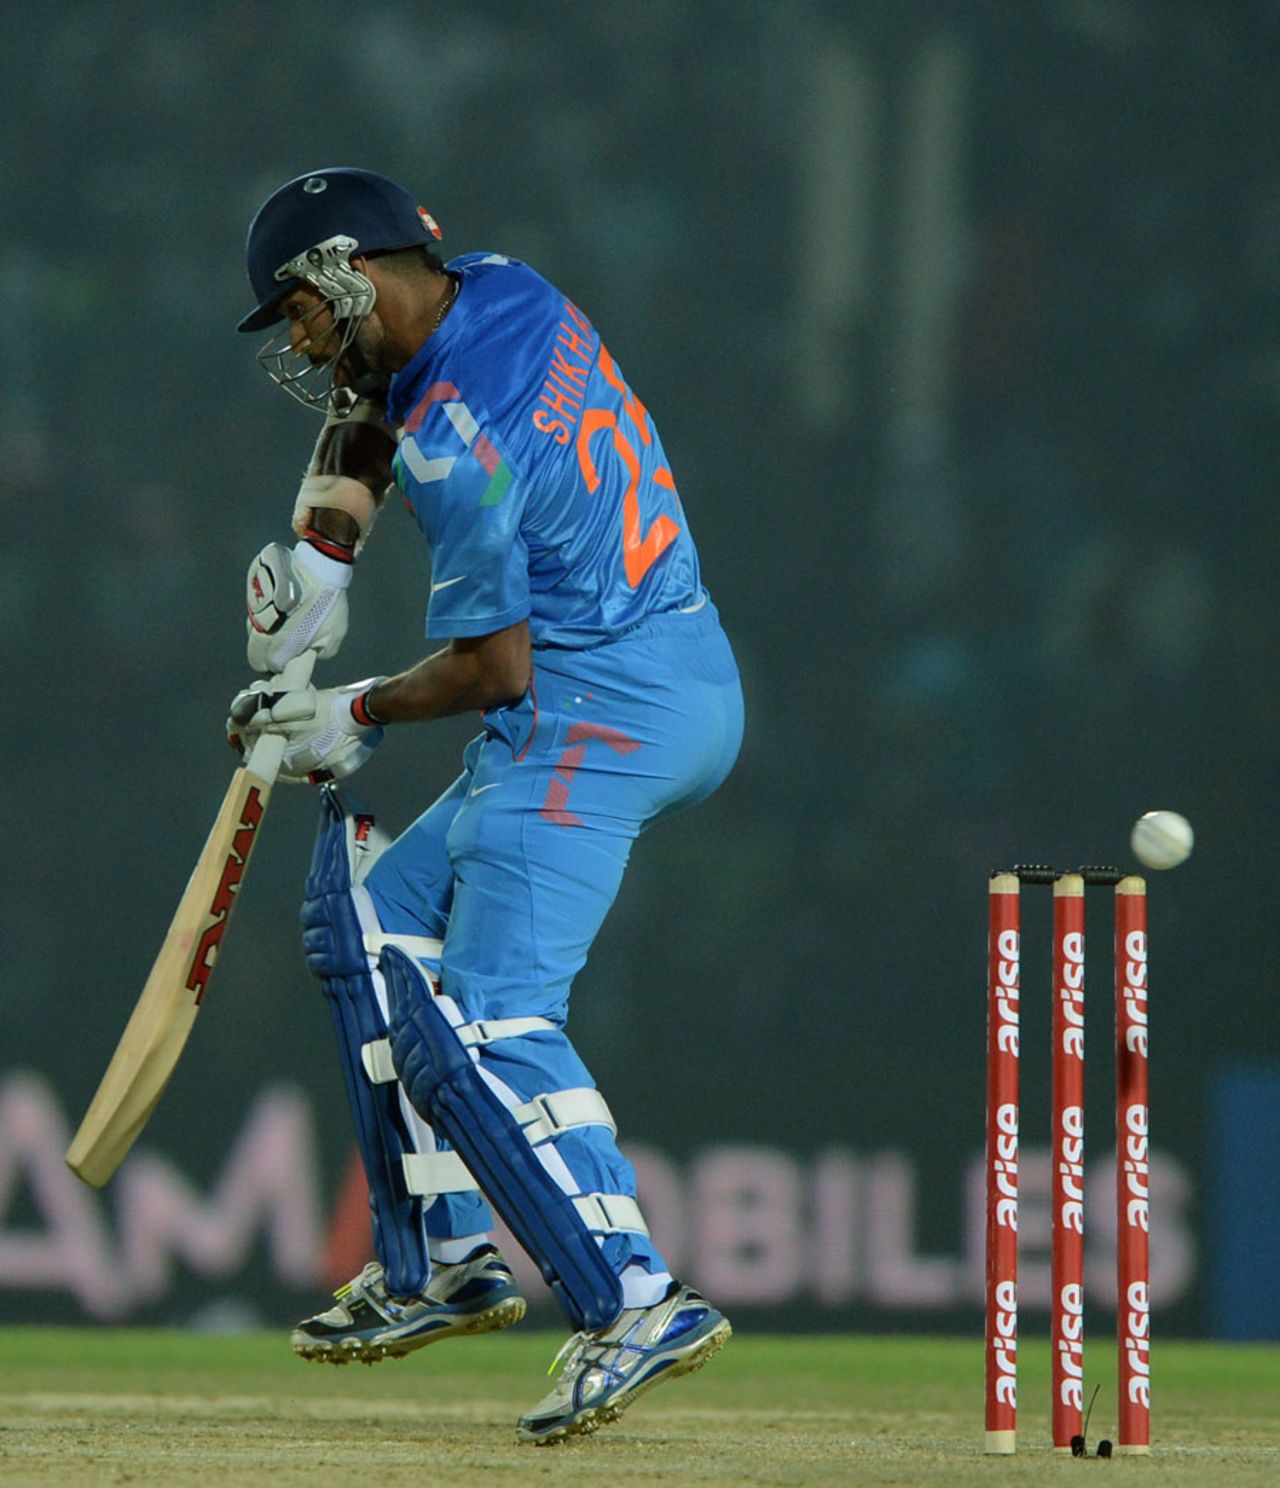 Shikhar Dhawan struggled to find his timing, Bangladesh v India, Asia Cup 2014, Fatullah, February 26, 2014